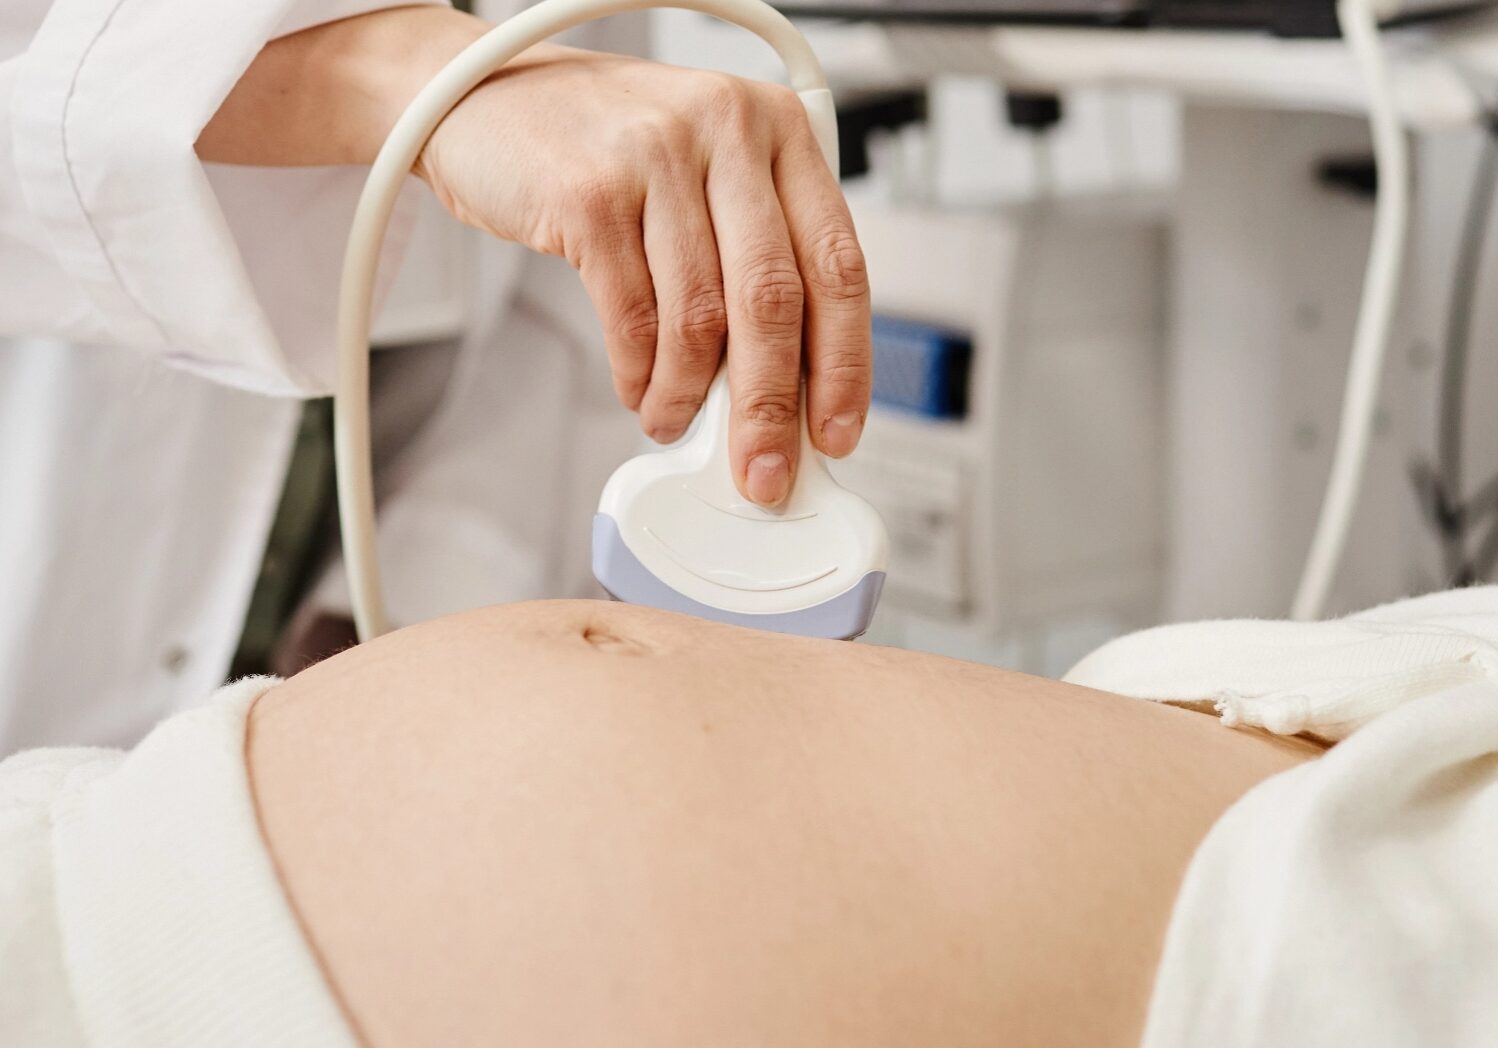 pregnancy-ultrasound-closeup-2022-03-31-10-10-47-utc@2x